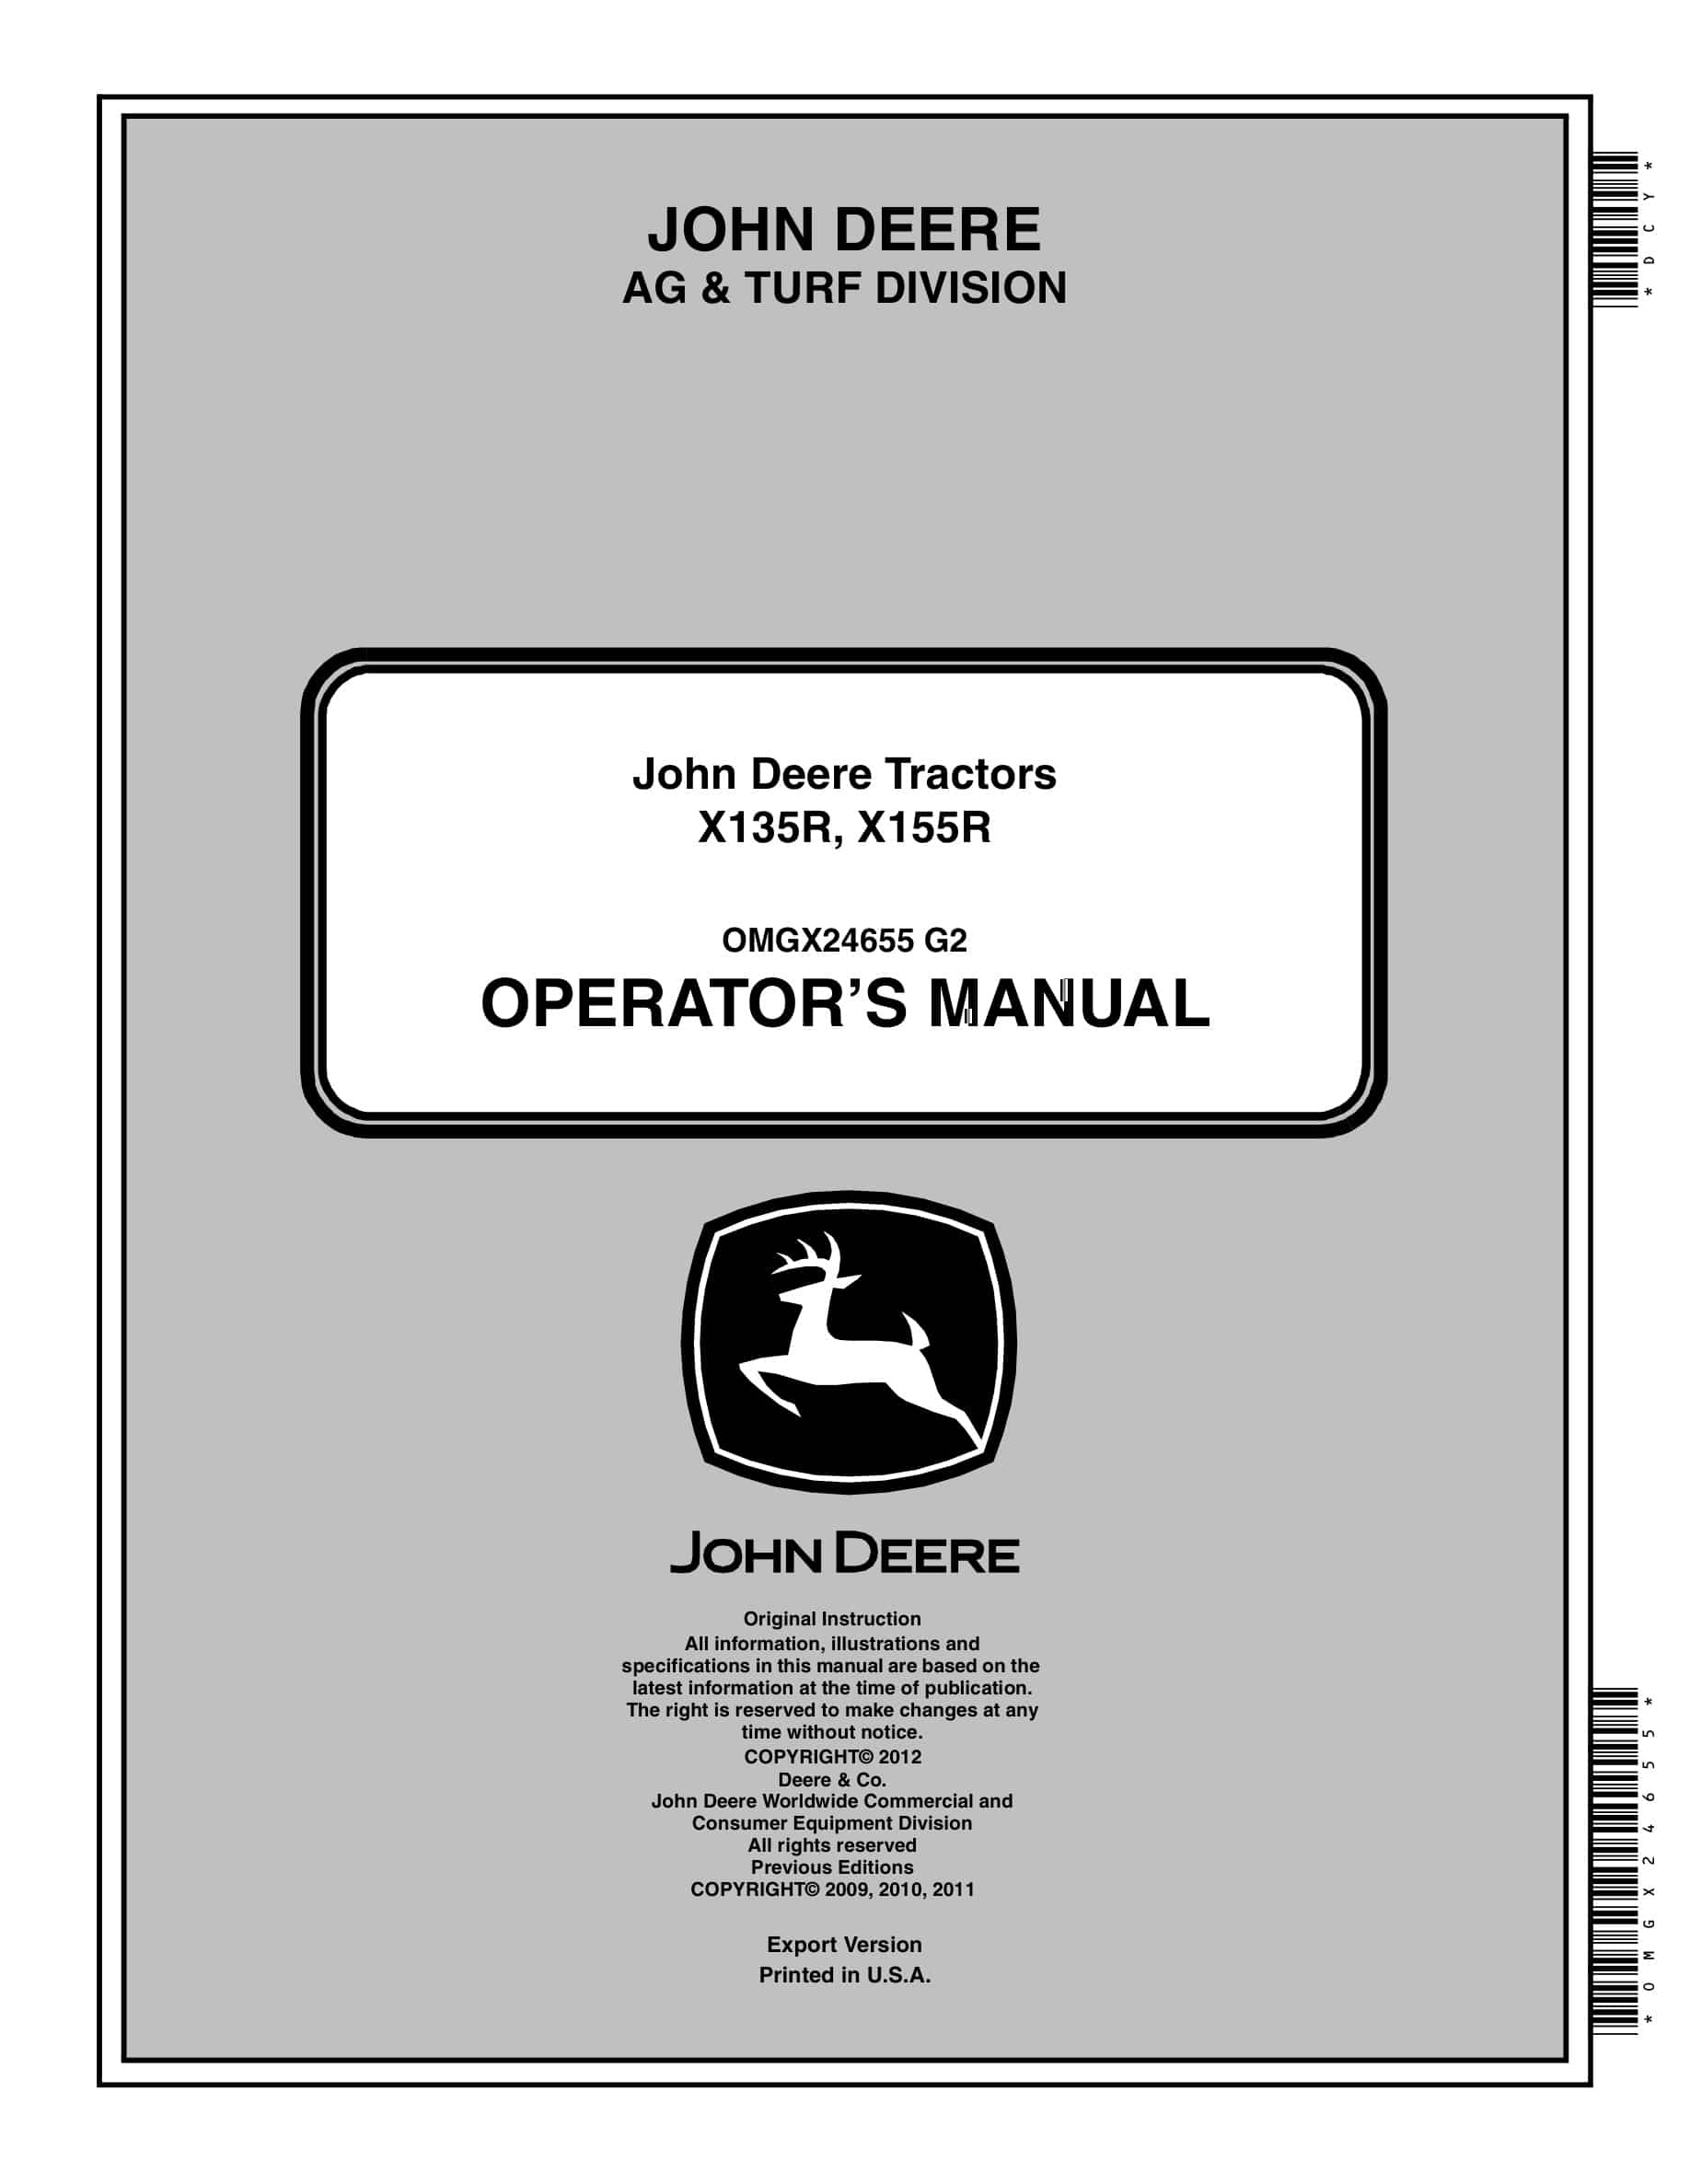 John Deere X135r, X155r Tractors Operator Manual mgx24655-1